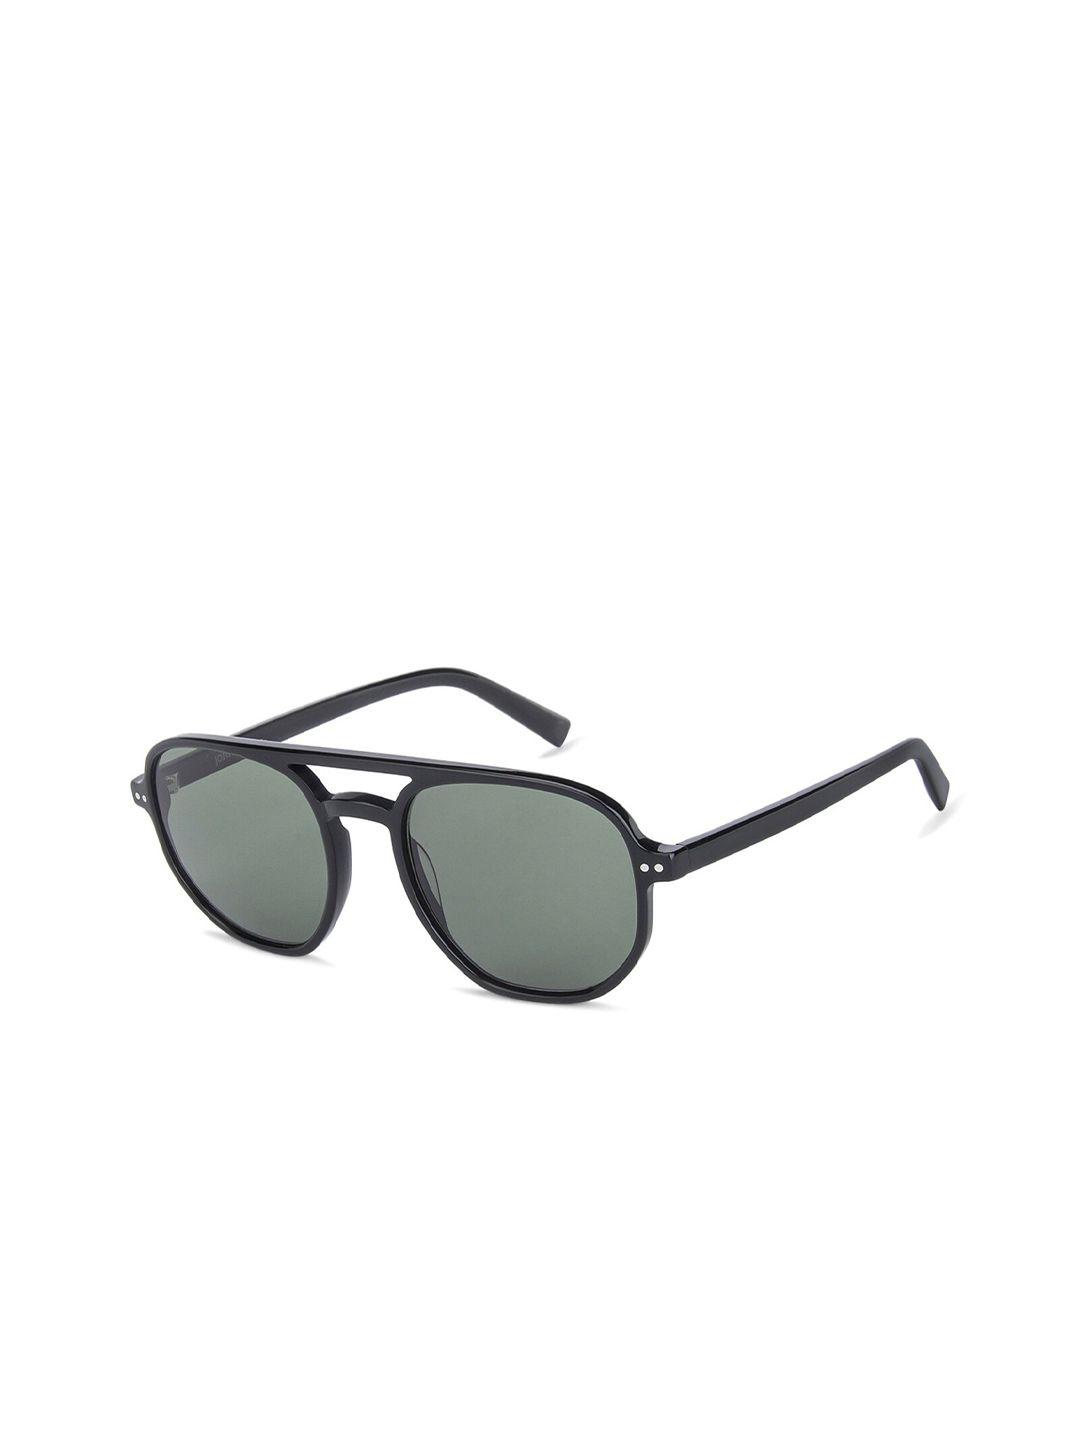 john jacobs unisex green lens & black square sunglasses with uv protected lens